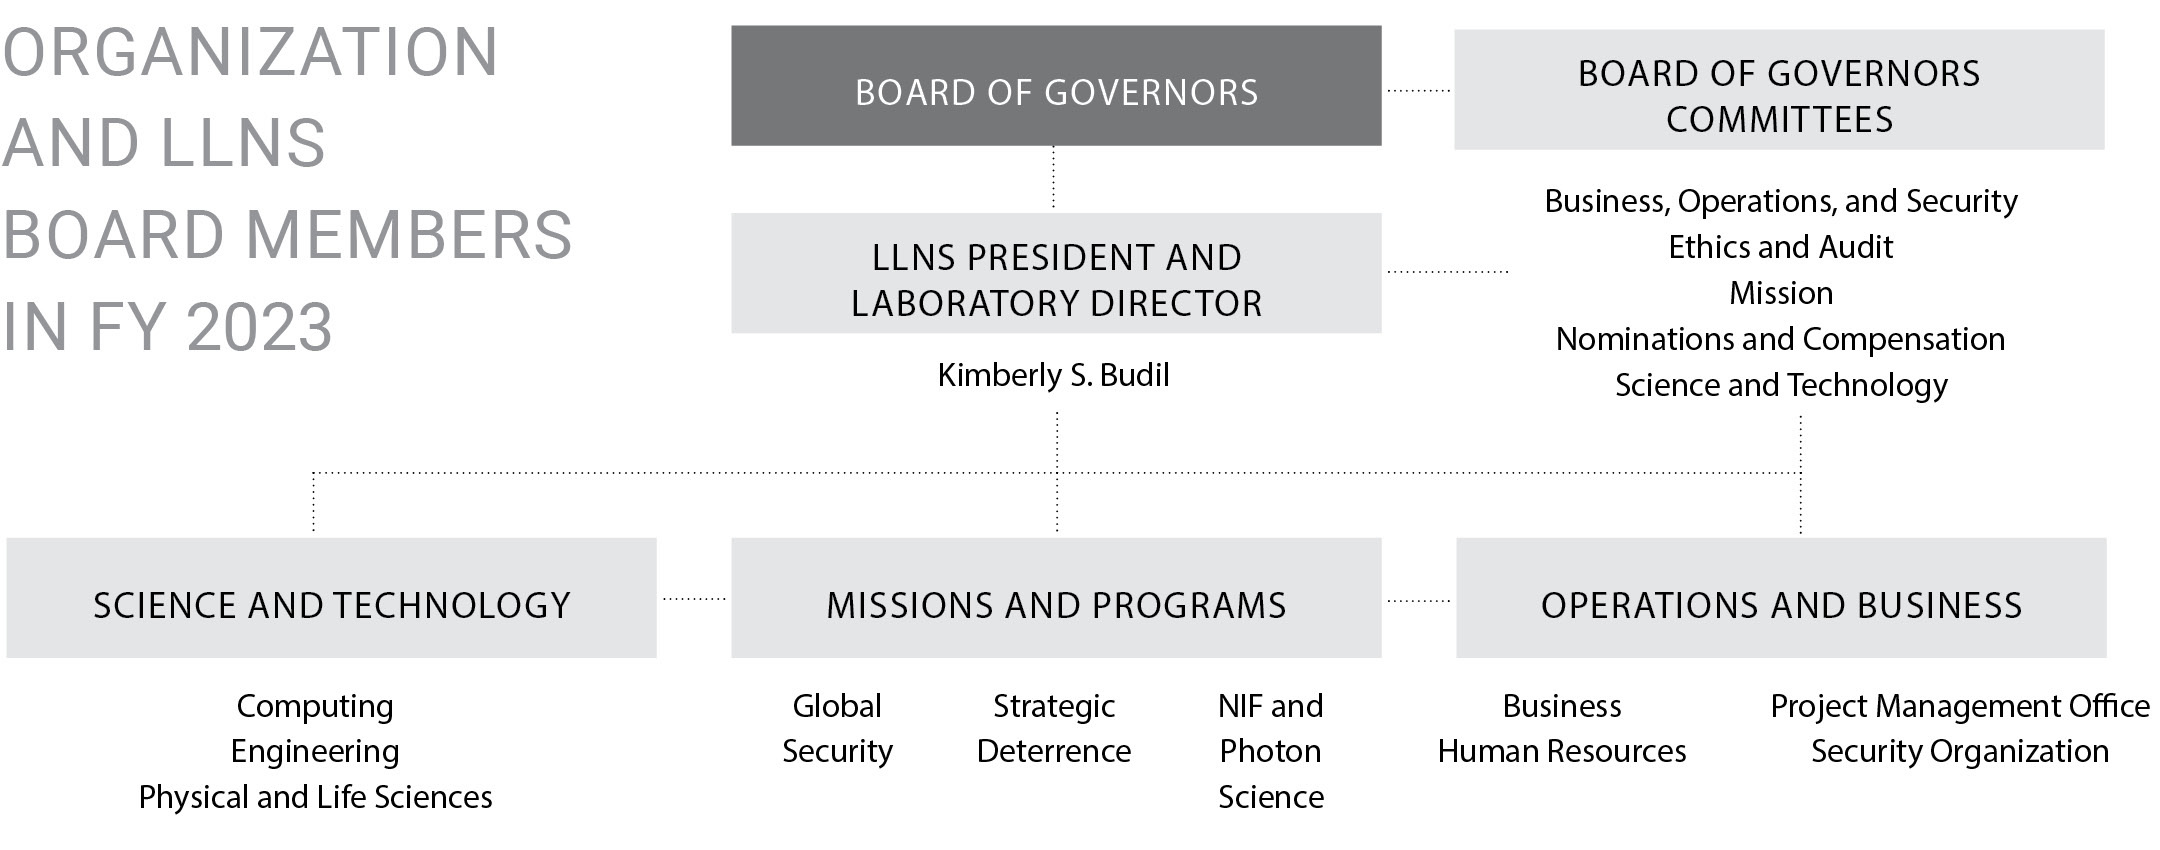 FY2023 Organization and LLNS Board Members organization chart